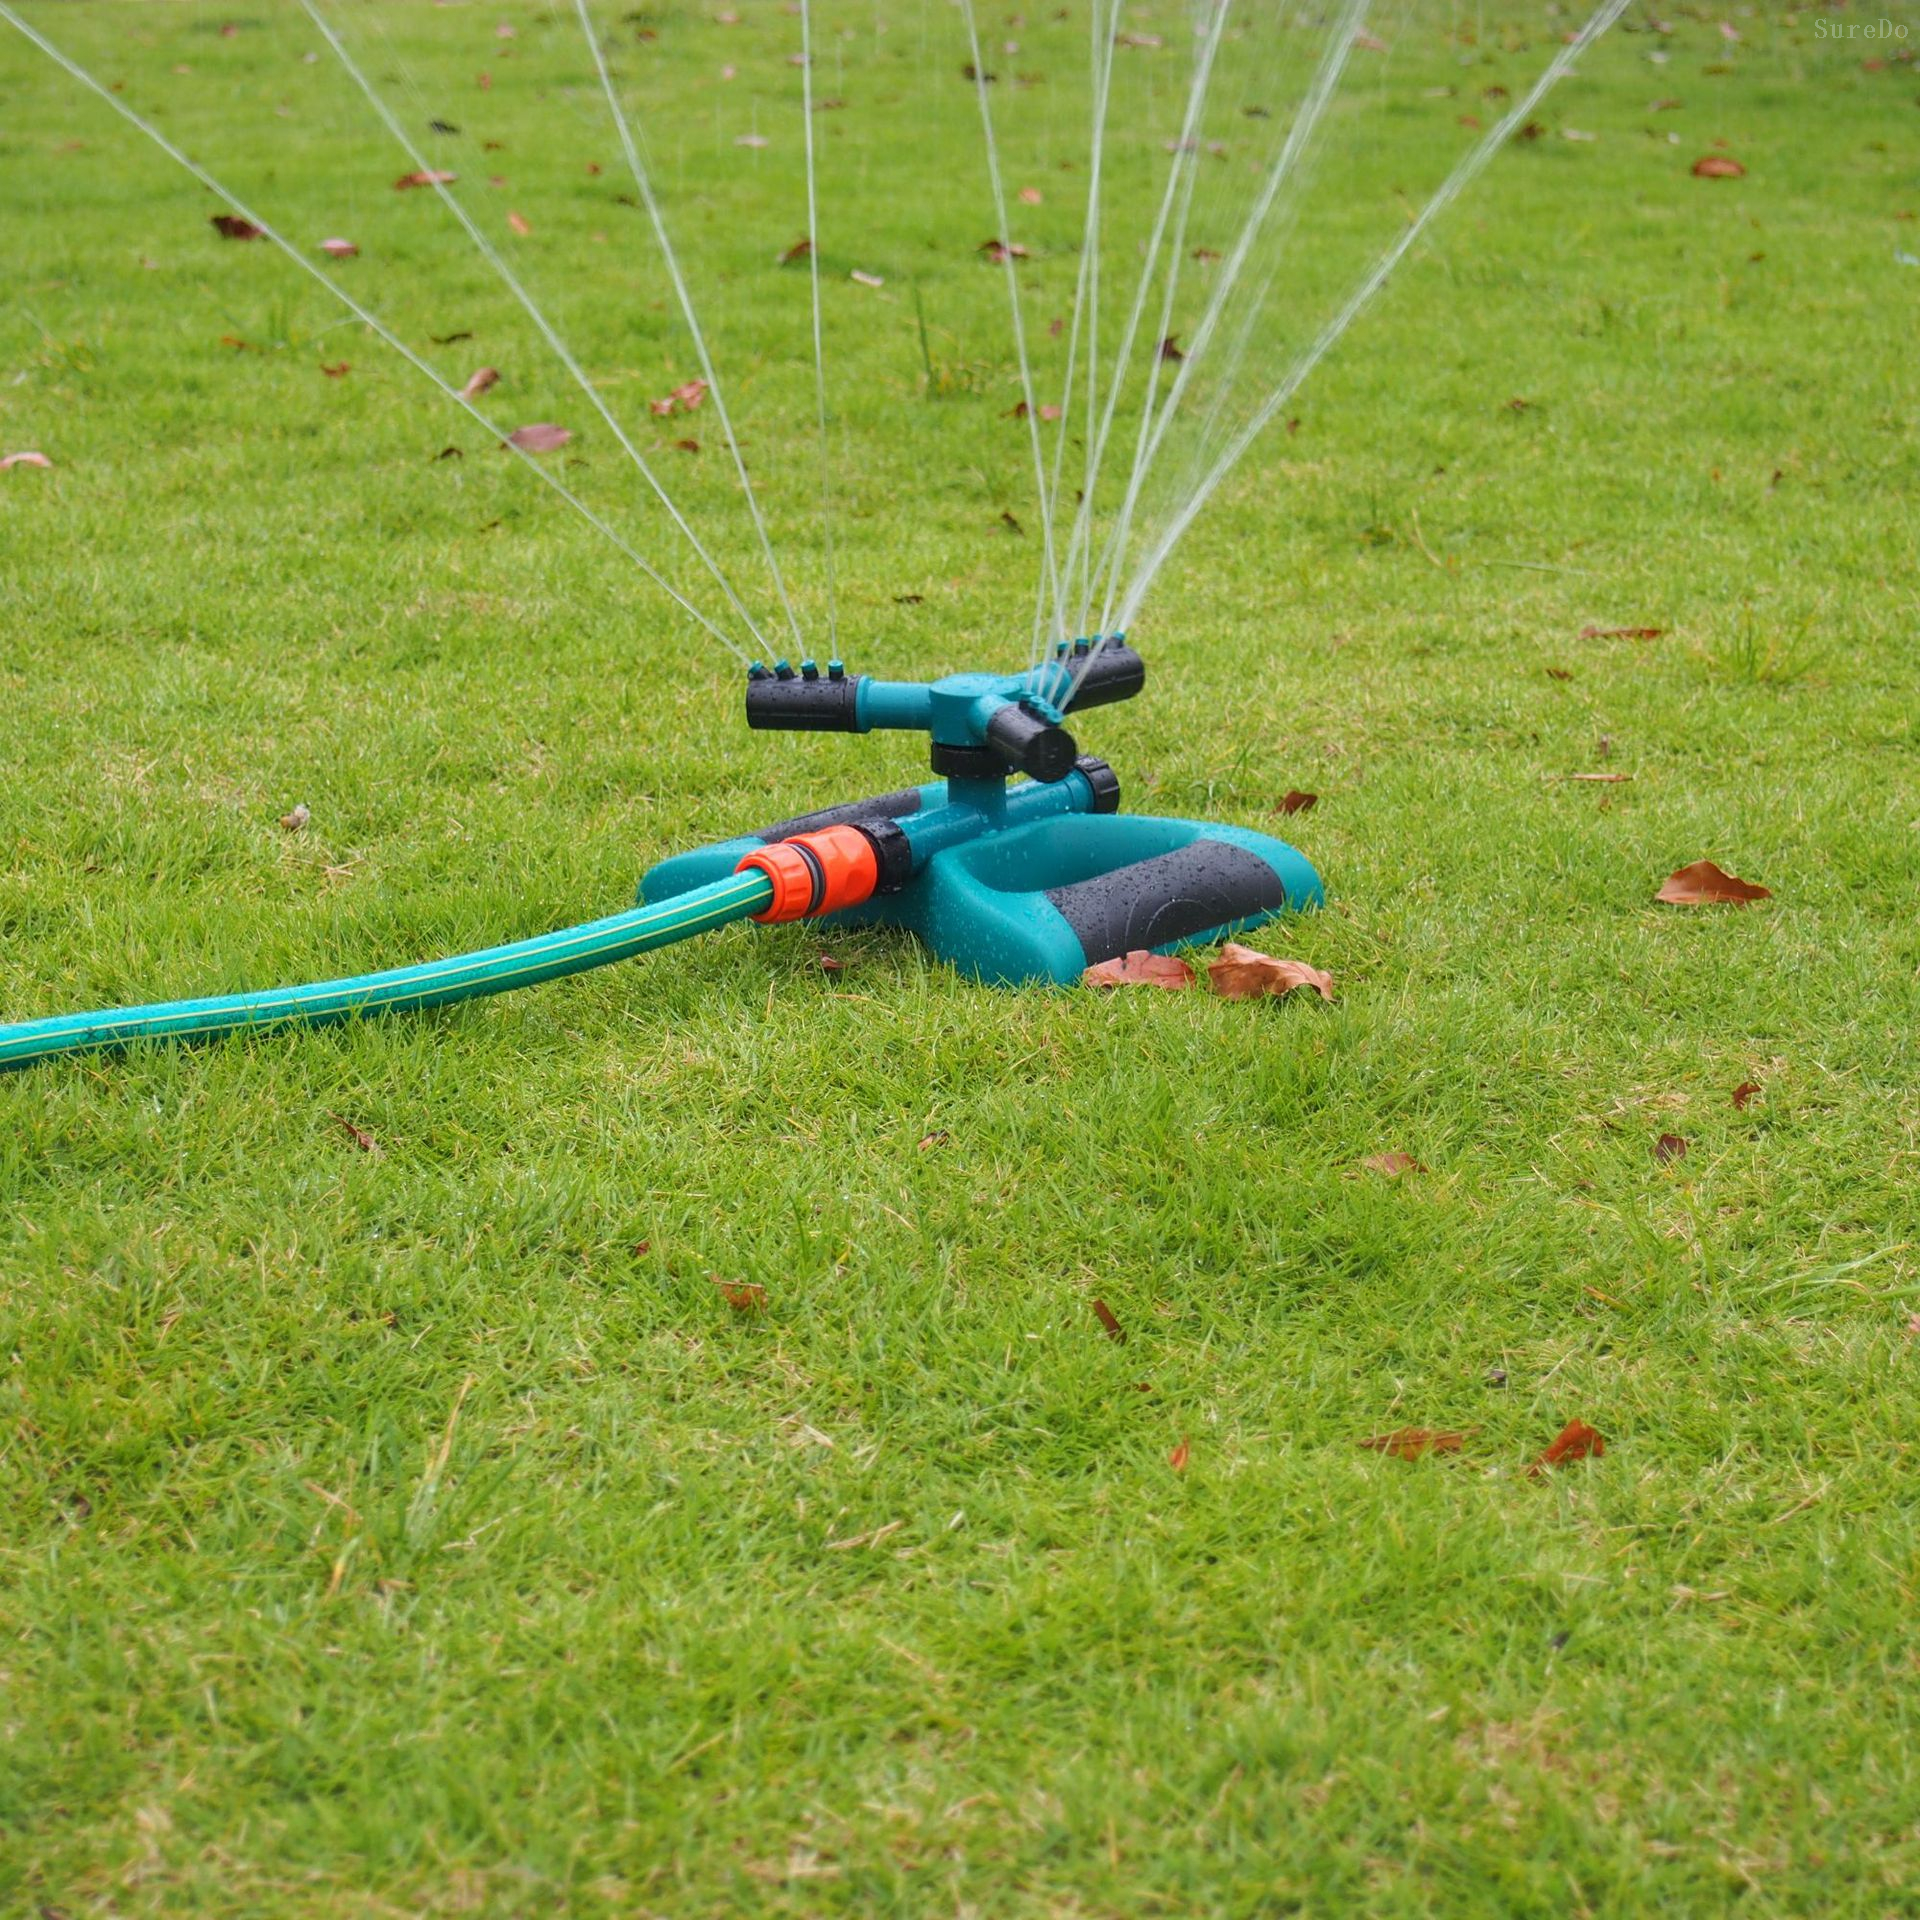 Plastic 3-Arm Water Spray Sprinkler for Lawn